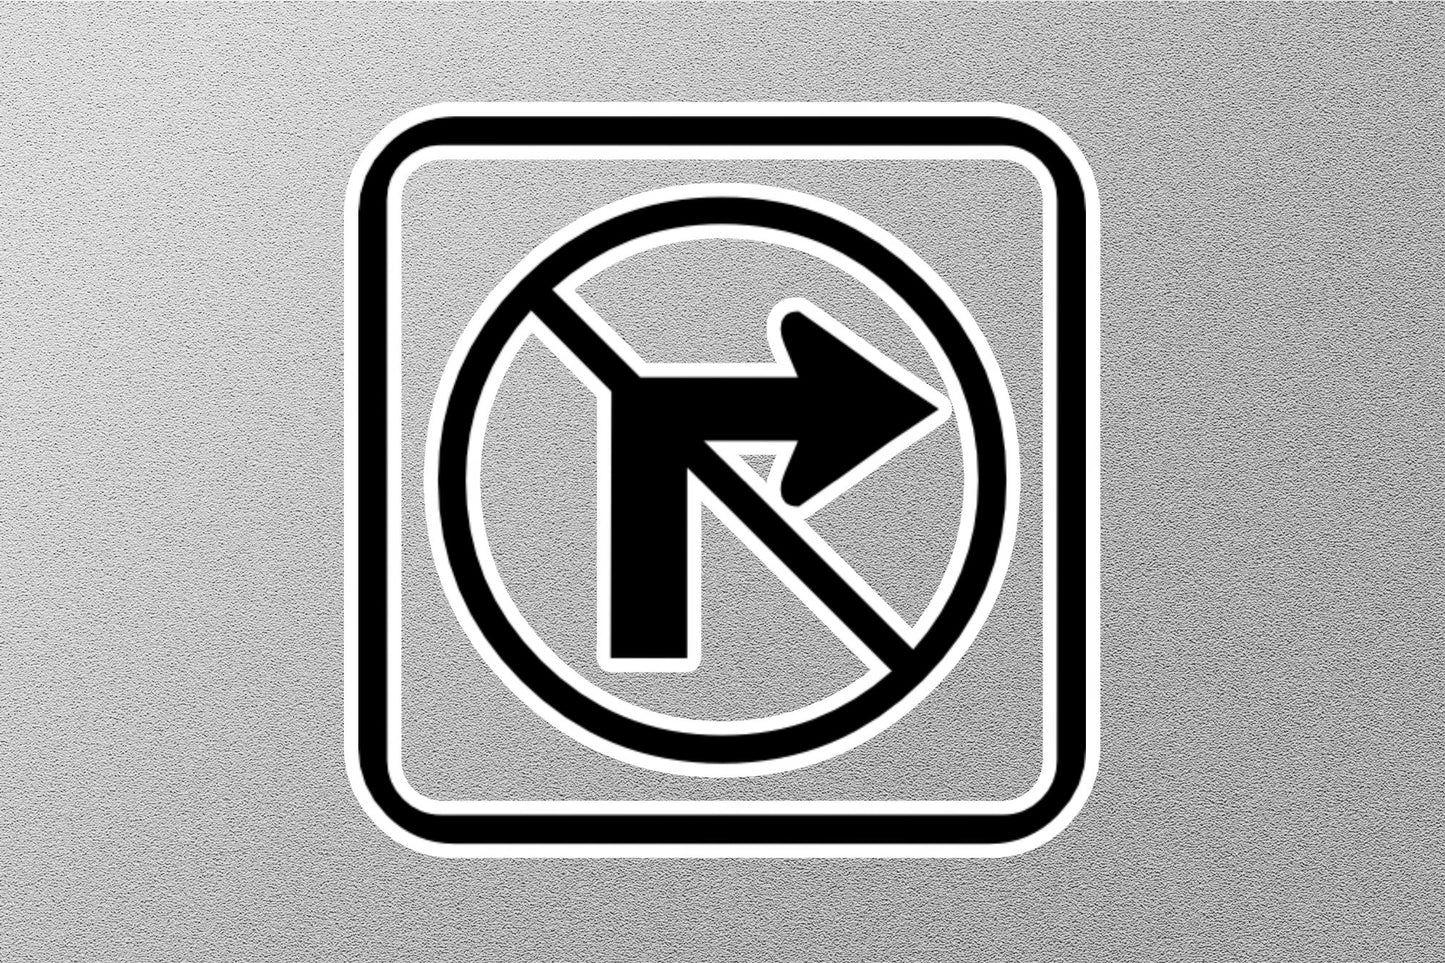 No Right Turn Sign Sticker